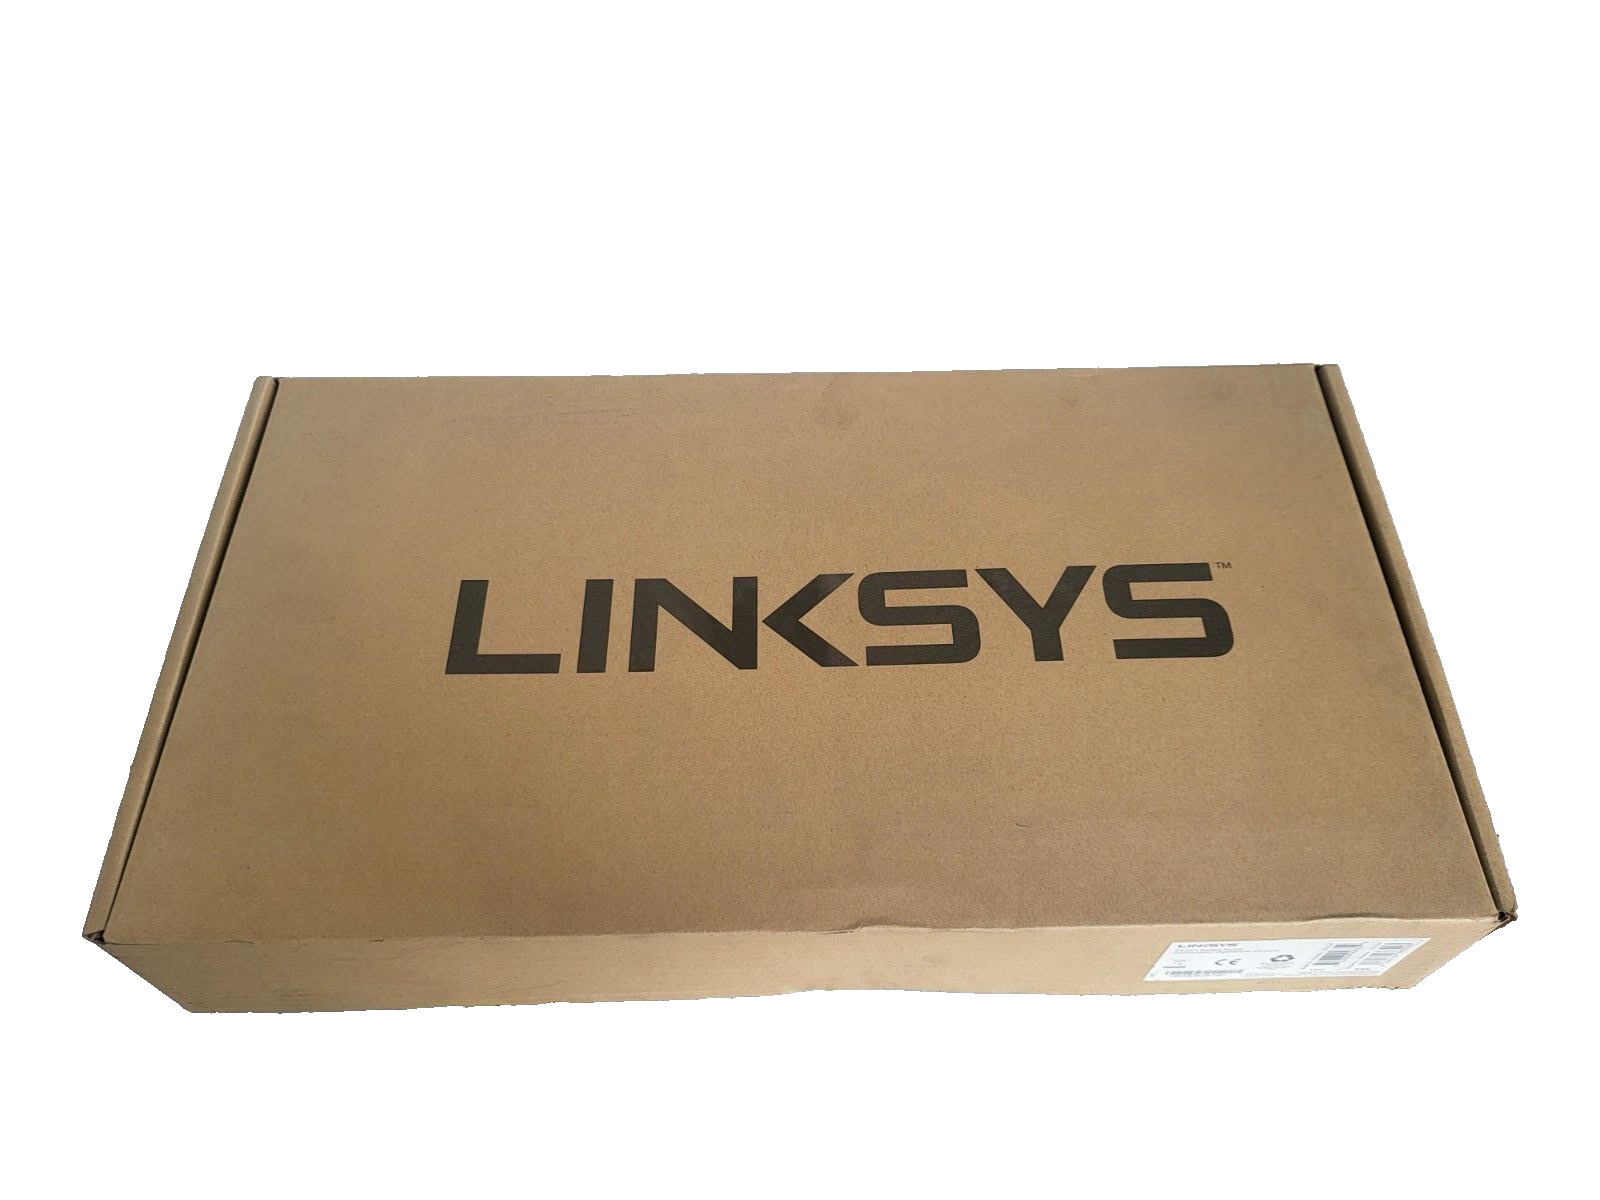 NEW Linksys LGS124 24 Port Gigabit 1000 Mbps Gigabit Unmanaged Network Switch